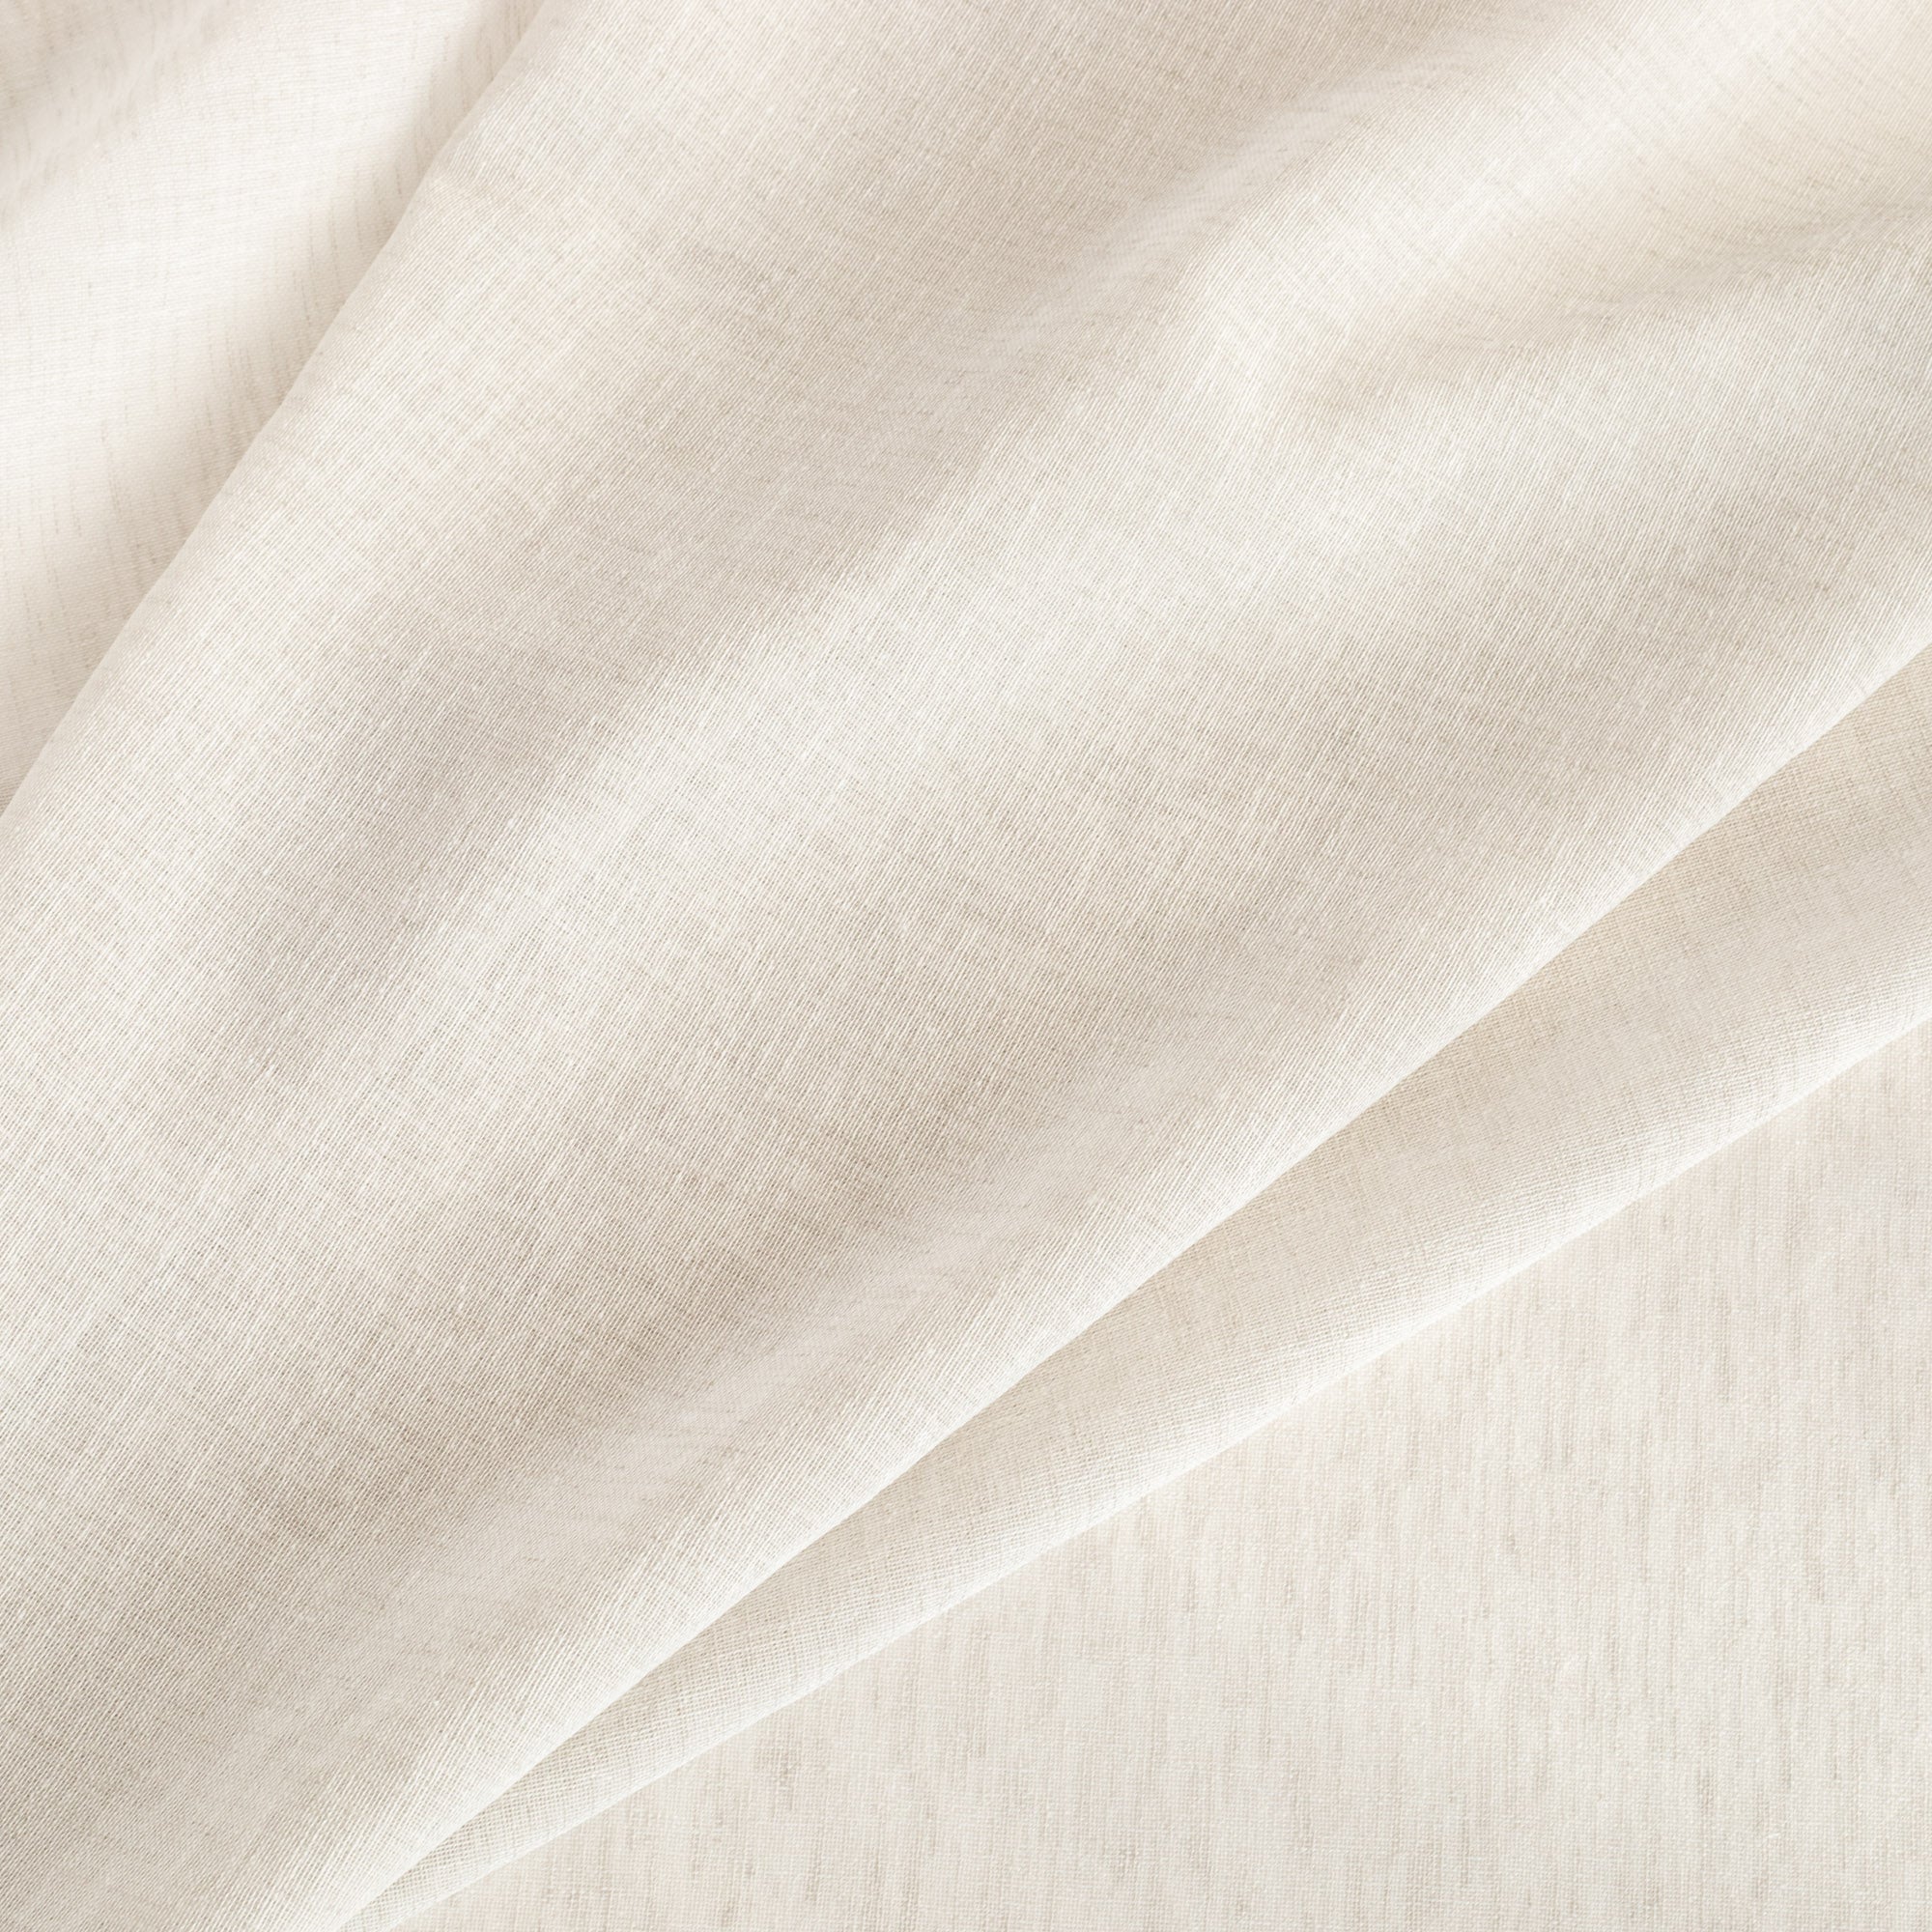 a sandy flax toned curtain fabric